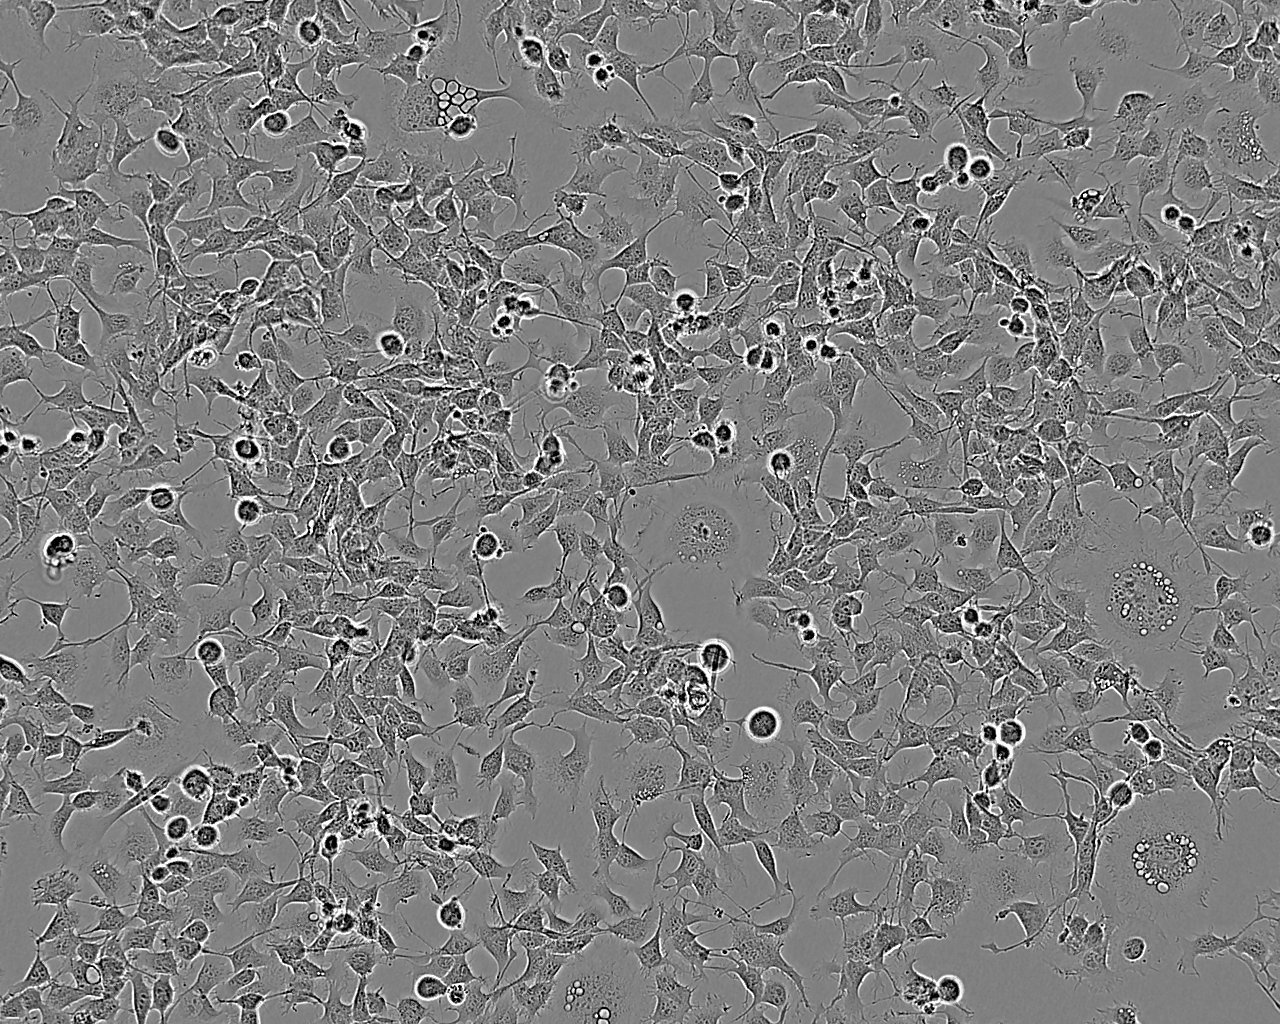 LN-382 cell line人脑胶质瘤细胞系